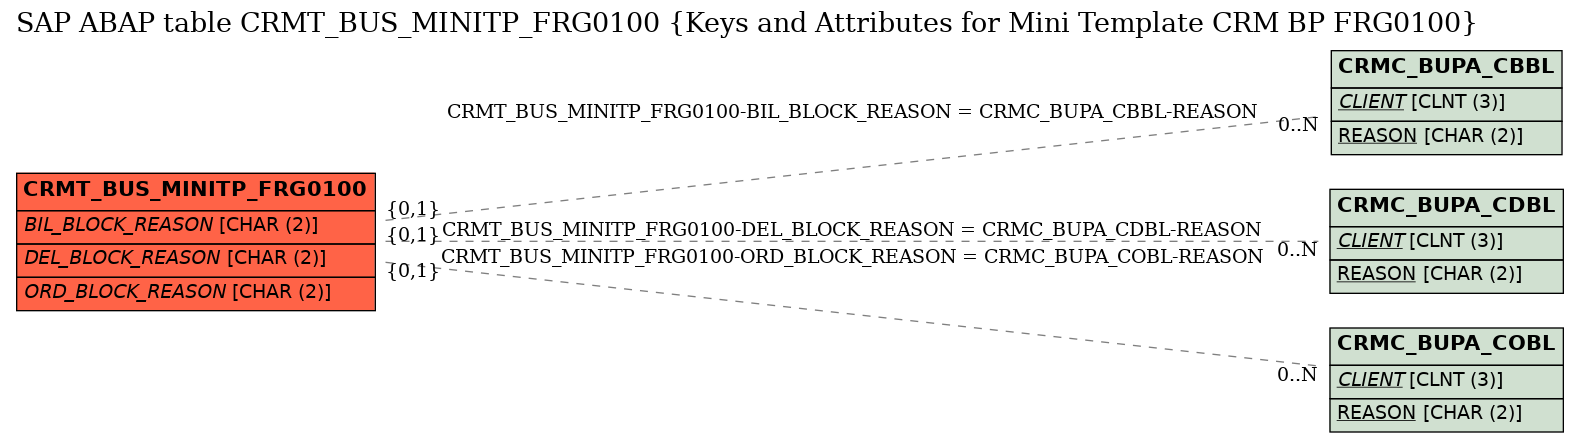 E-R Diagram for table CRMT_BUS_MINITP_FRG0100 (Keys and Attributes for Mini Template CRM BP FRG0100)